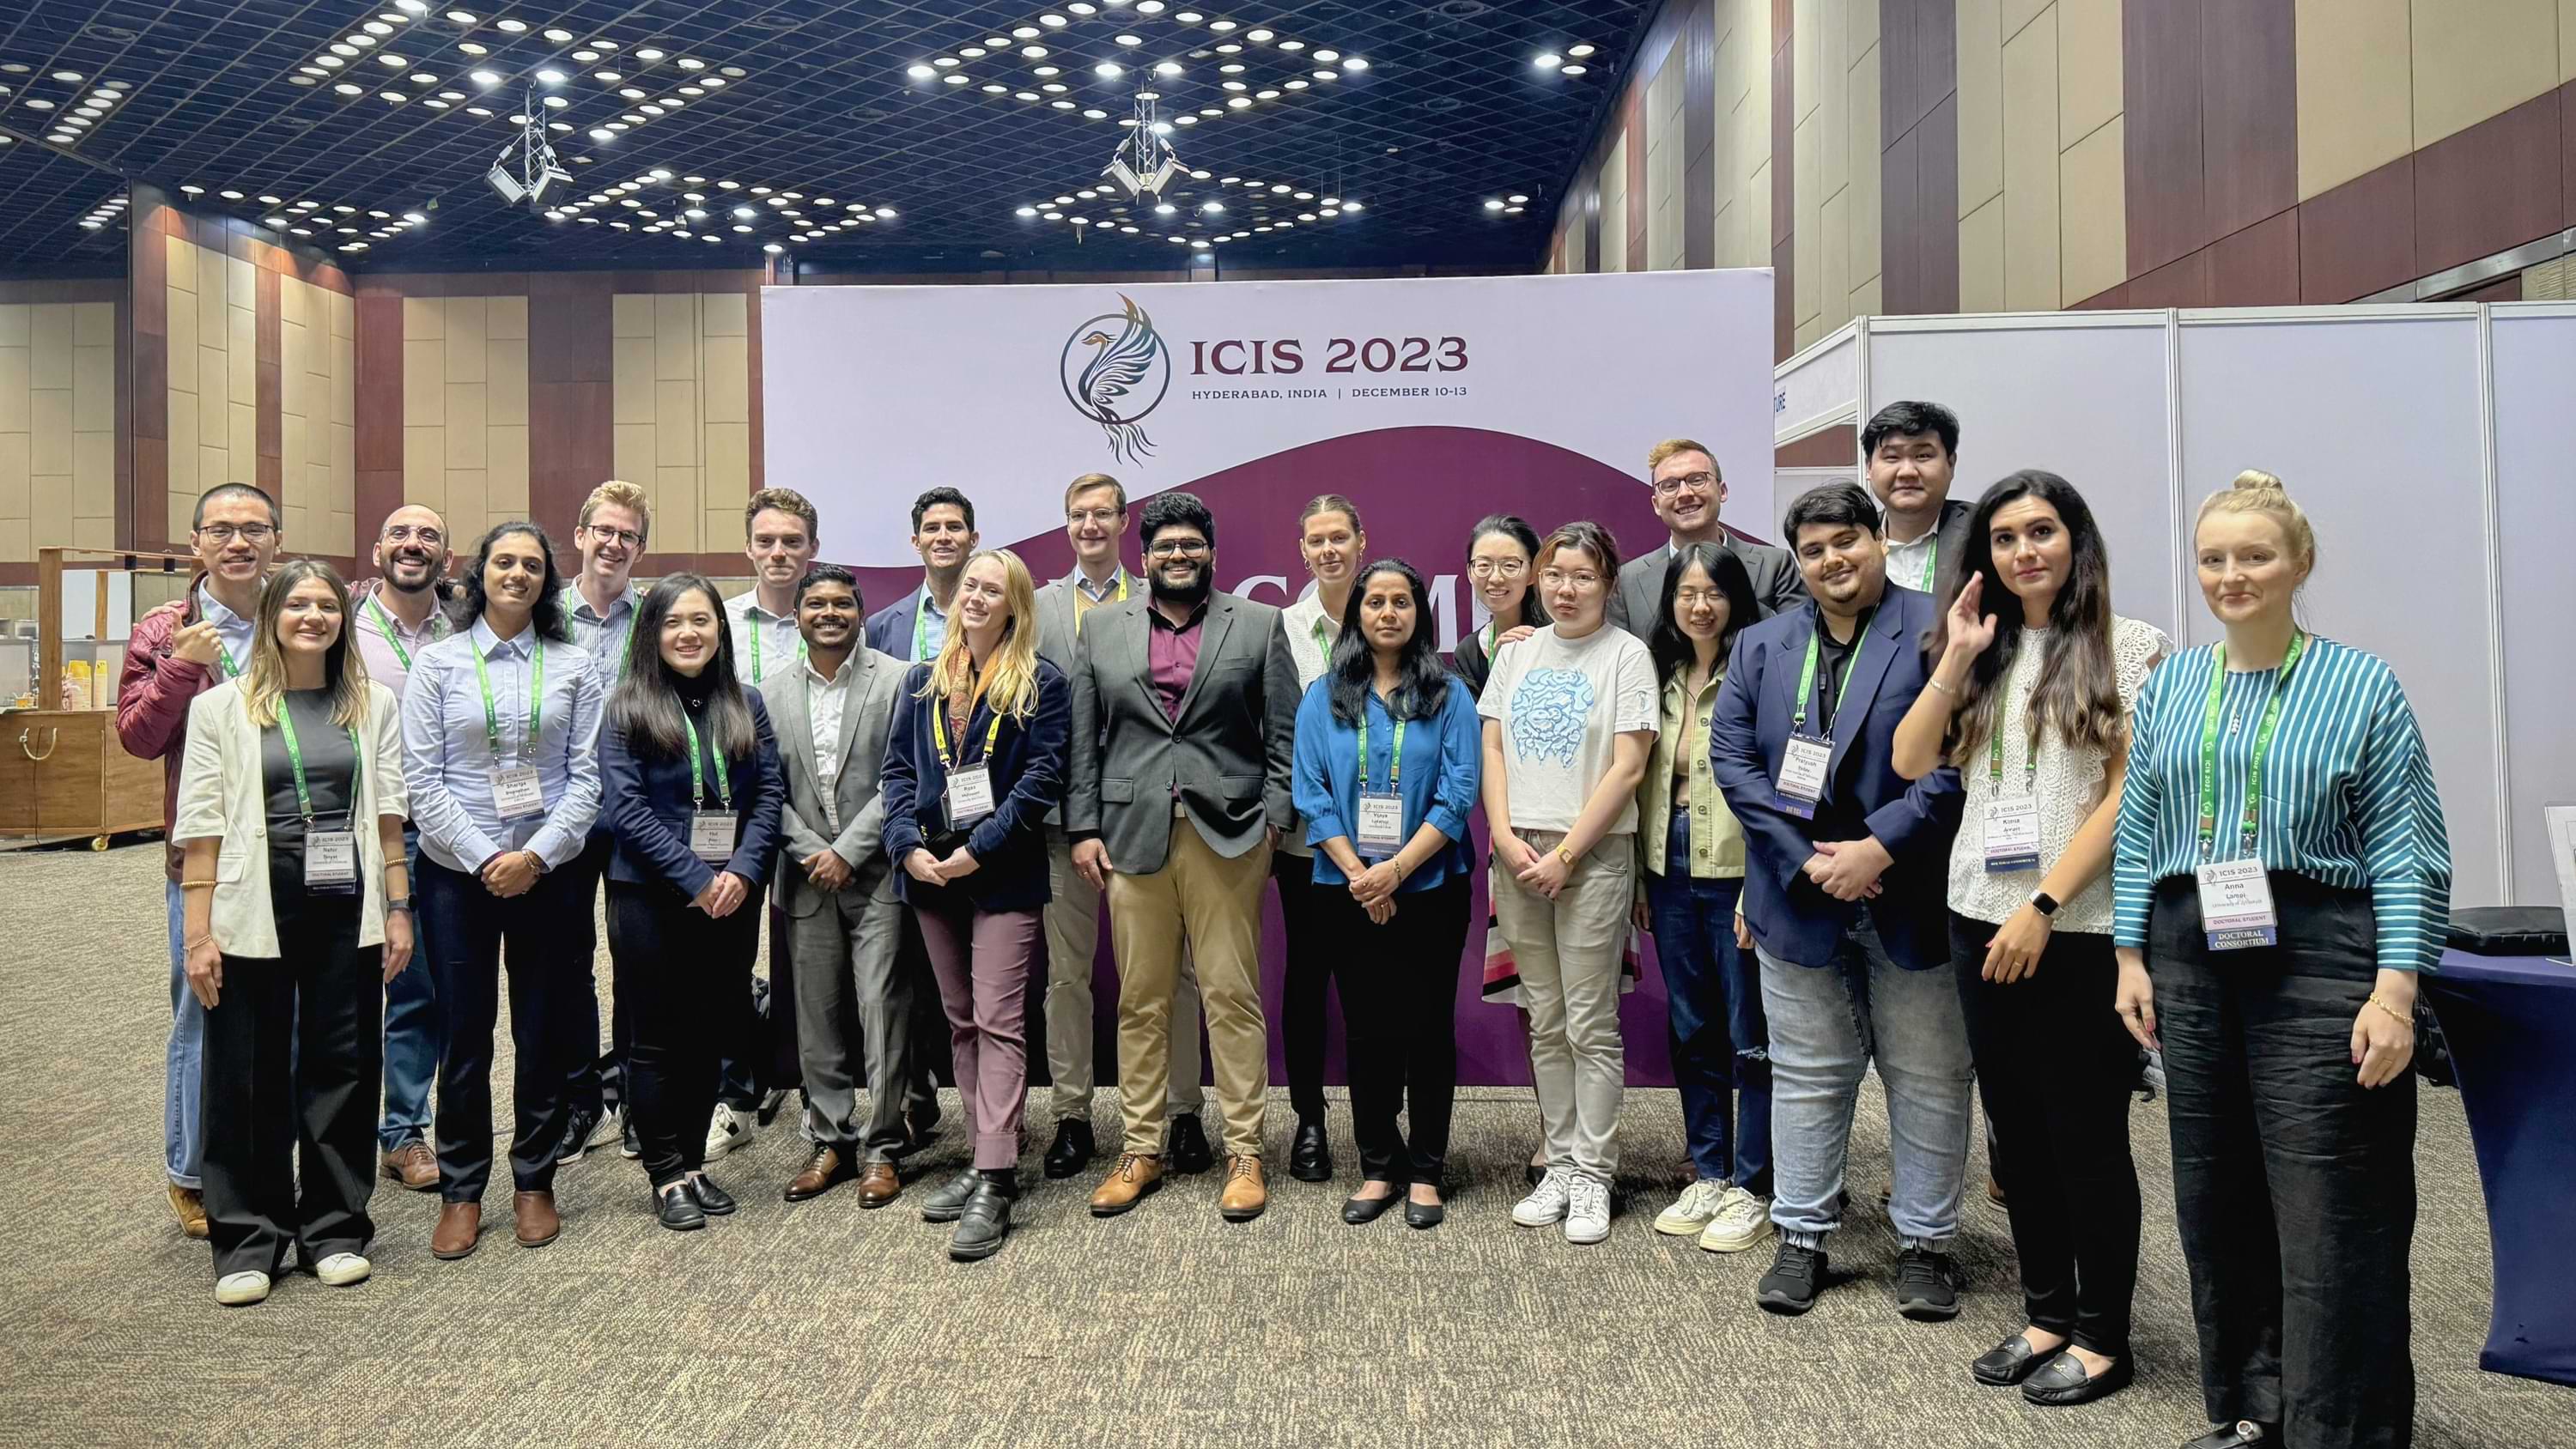 Some Consortium Attendees @ ICIS 2023